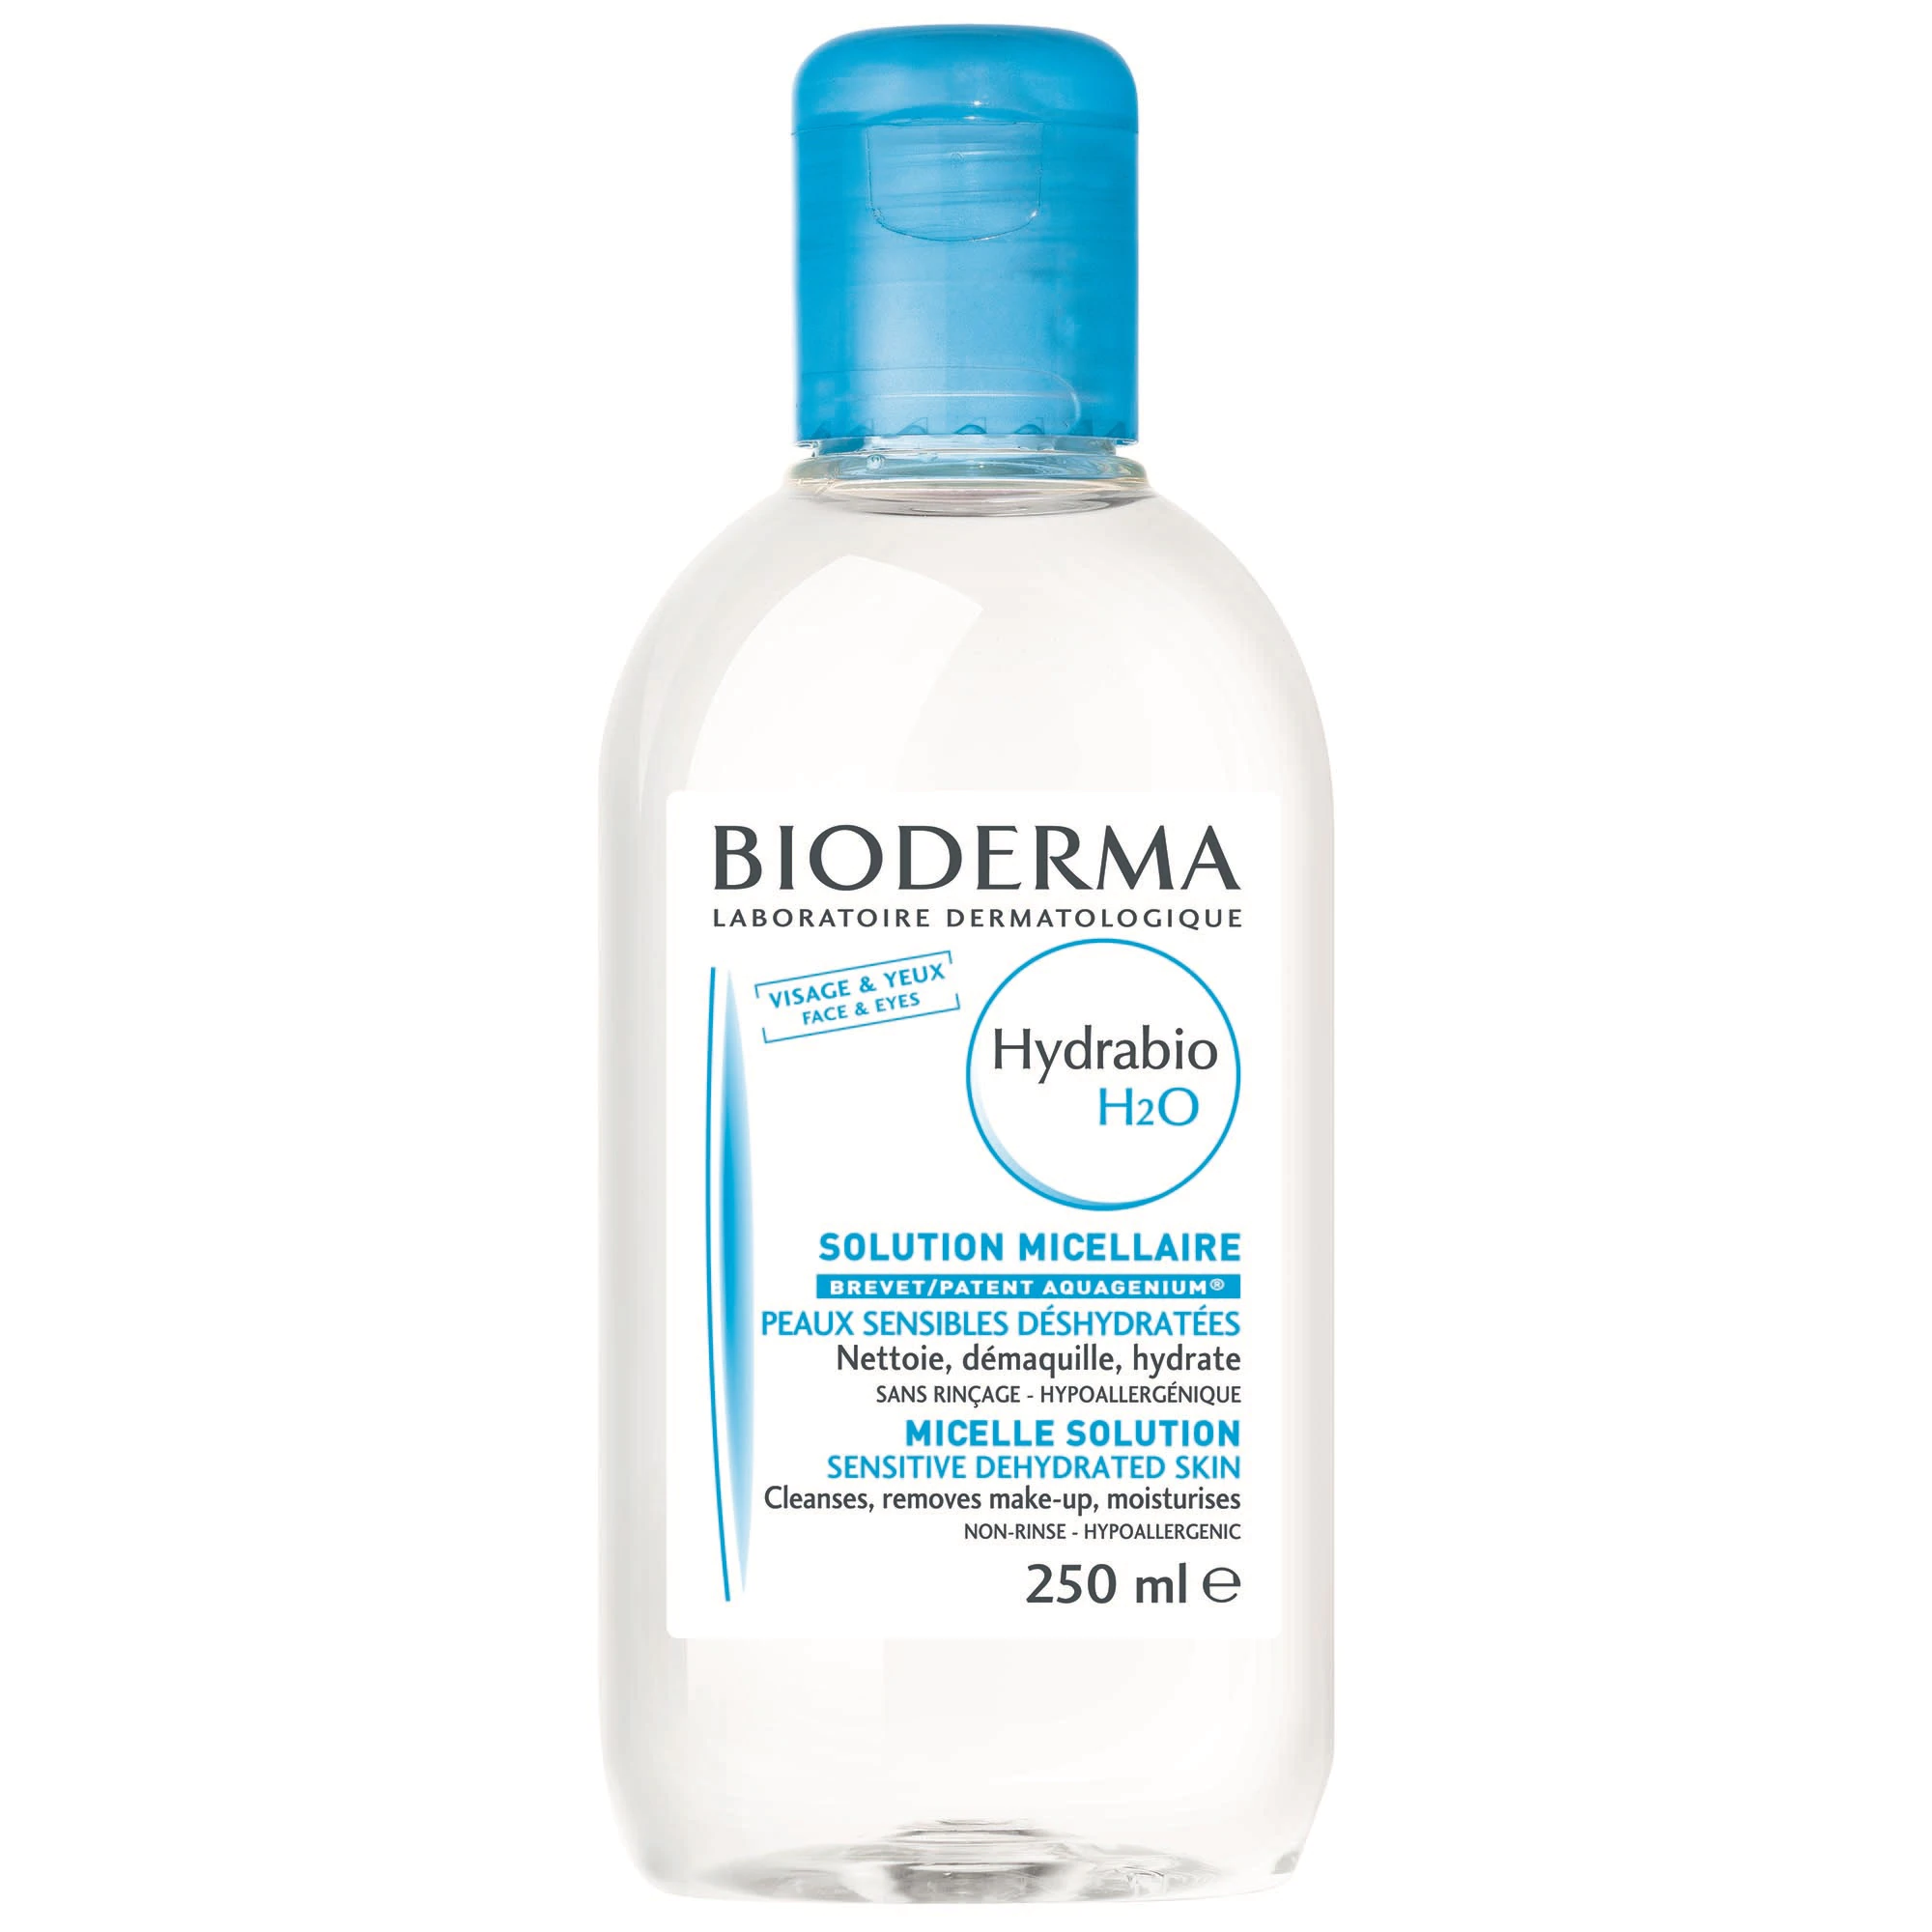 Lotiune micelara - Bioderma Hydrabio H2O solutie micelara hidratanta x 250ml, medik-on.ro